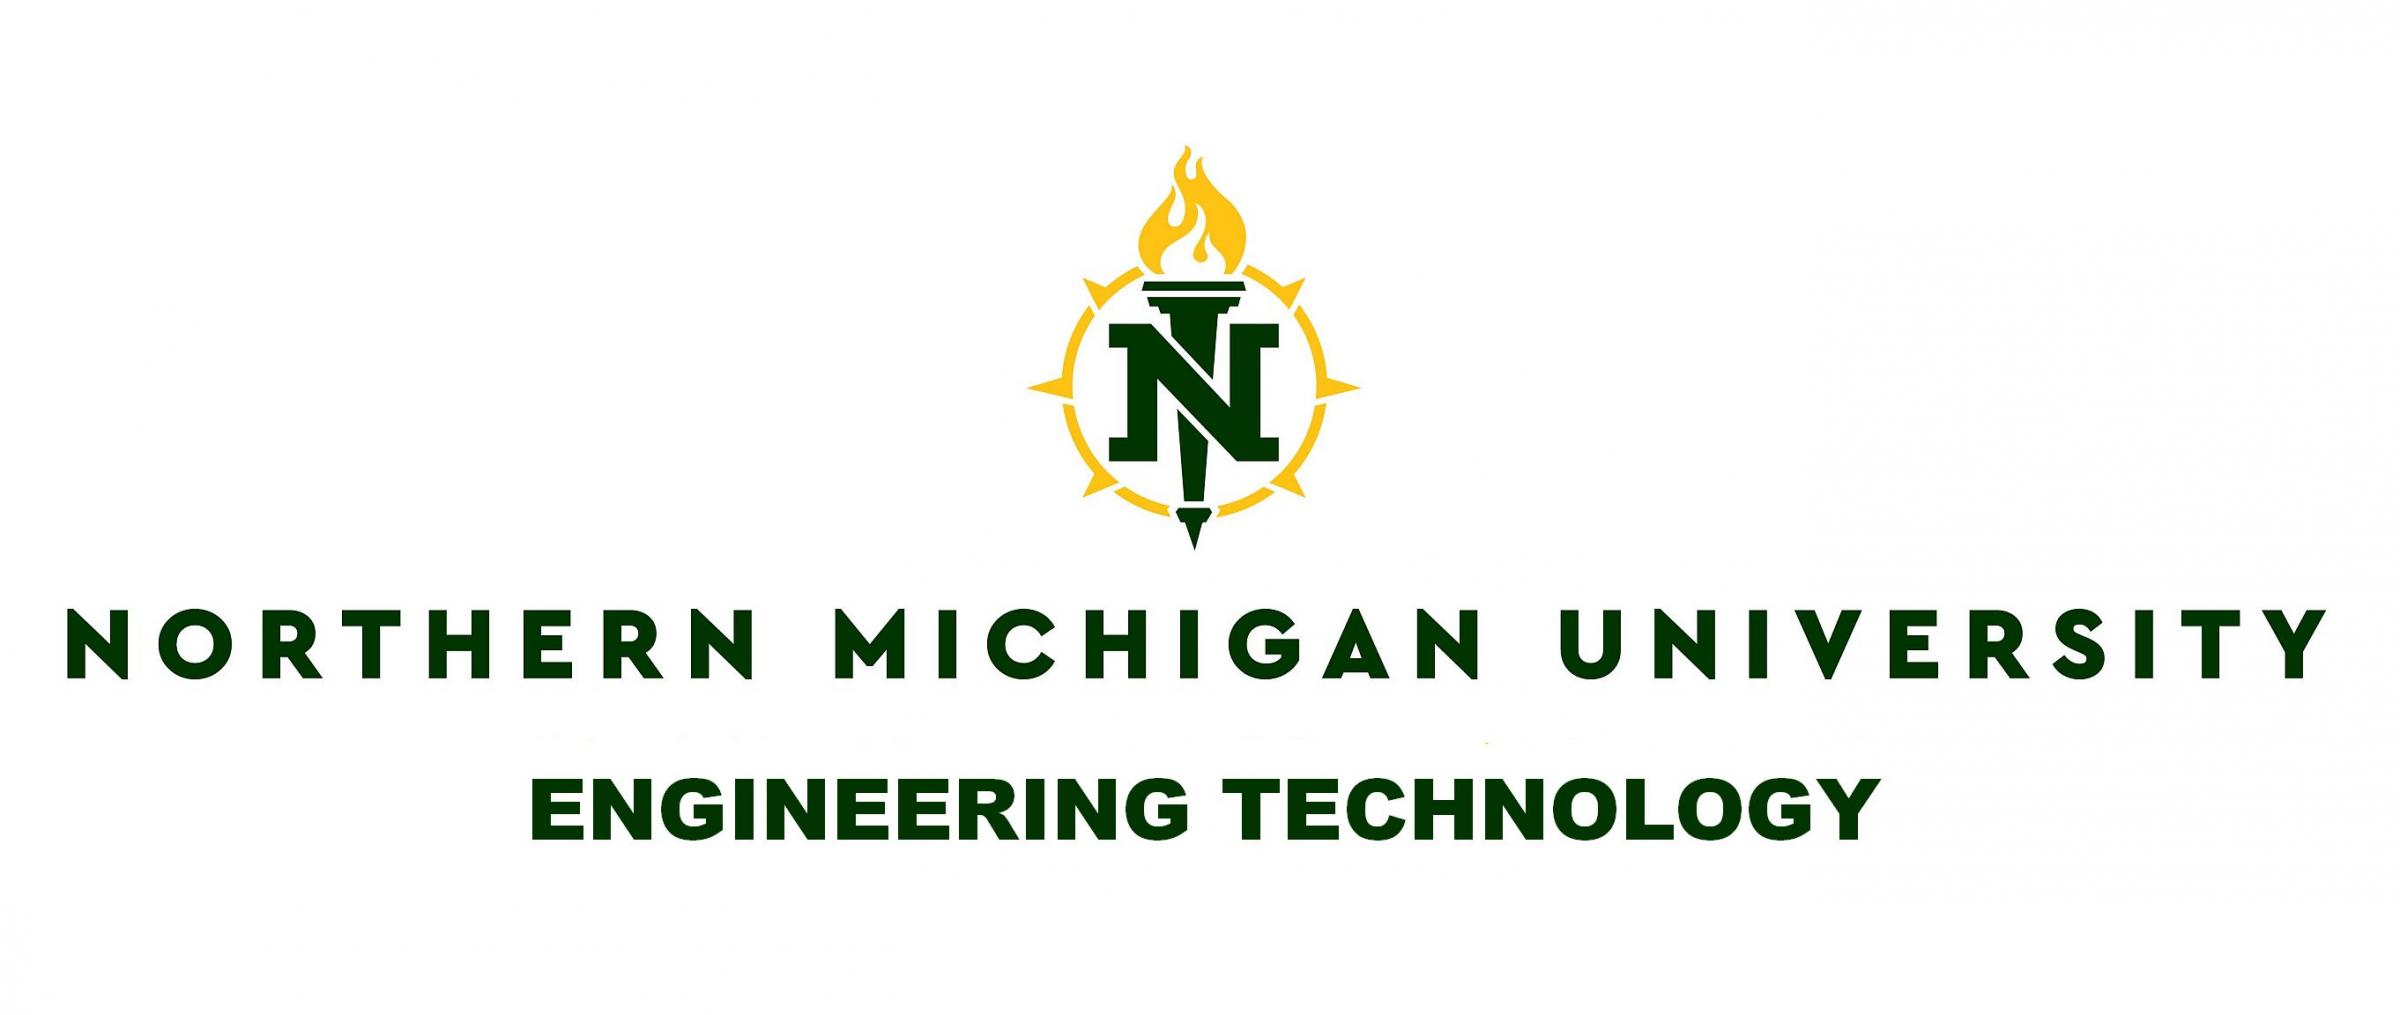 NMU Engineering Technology